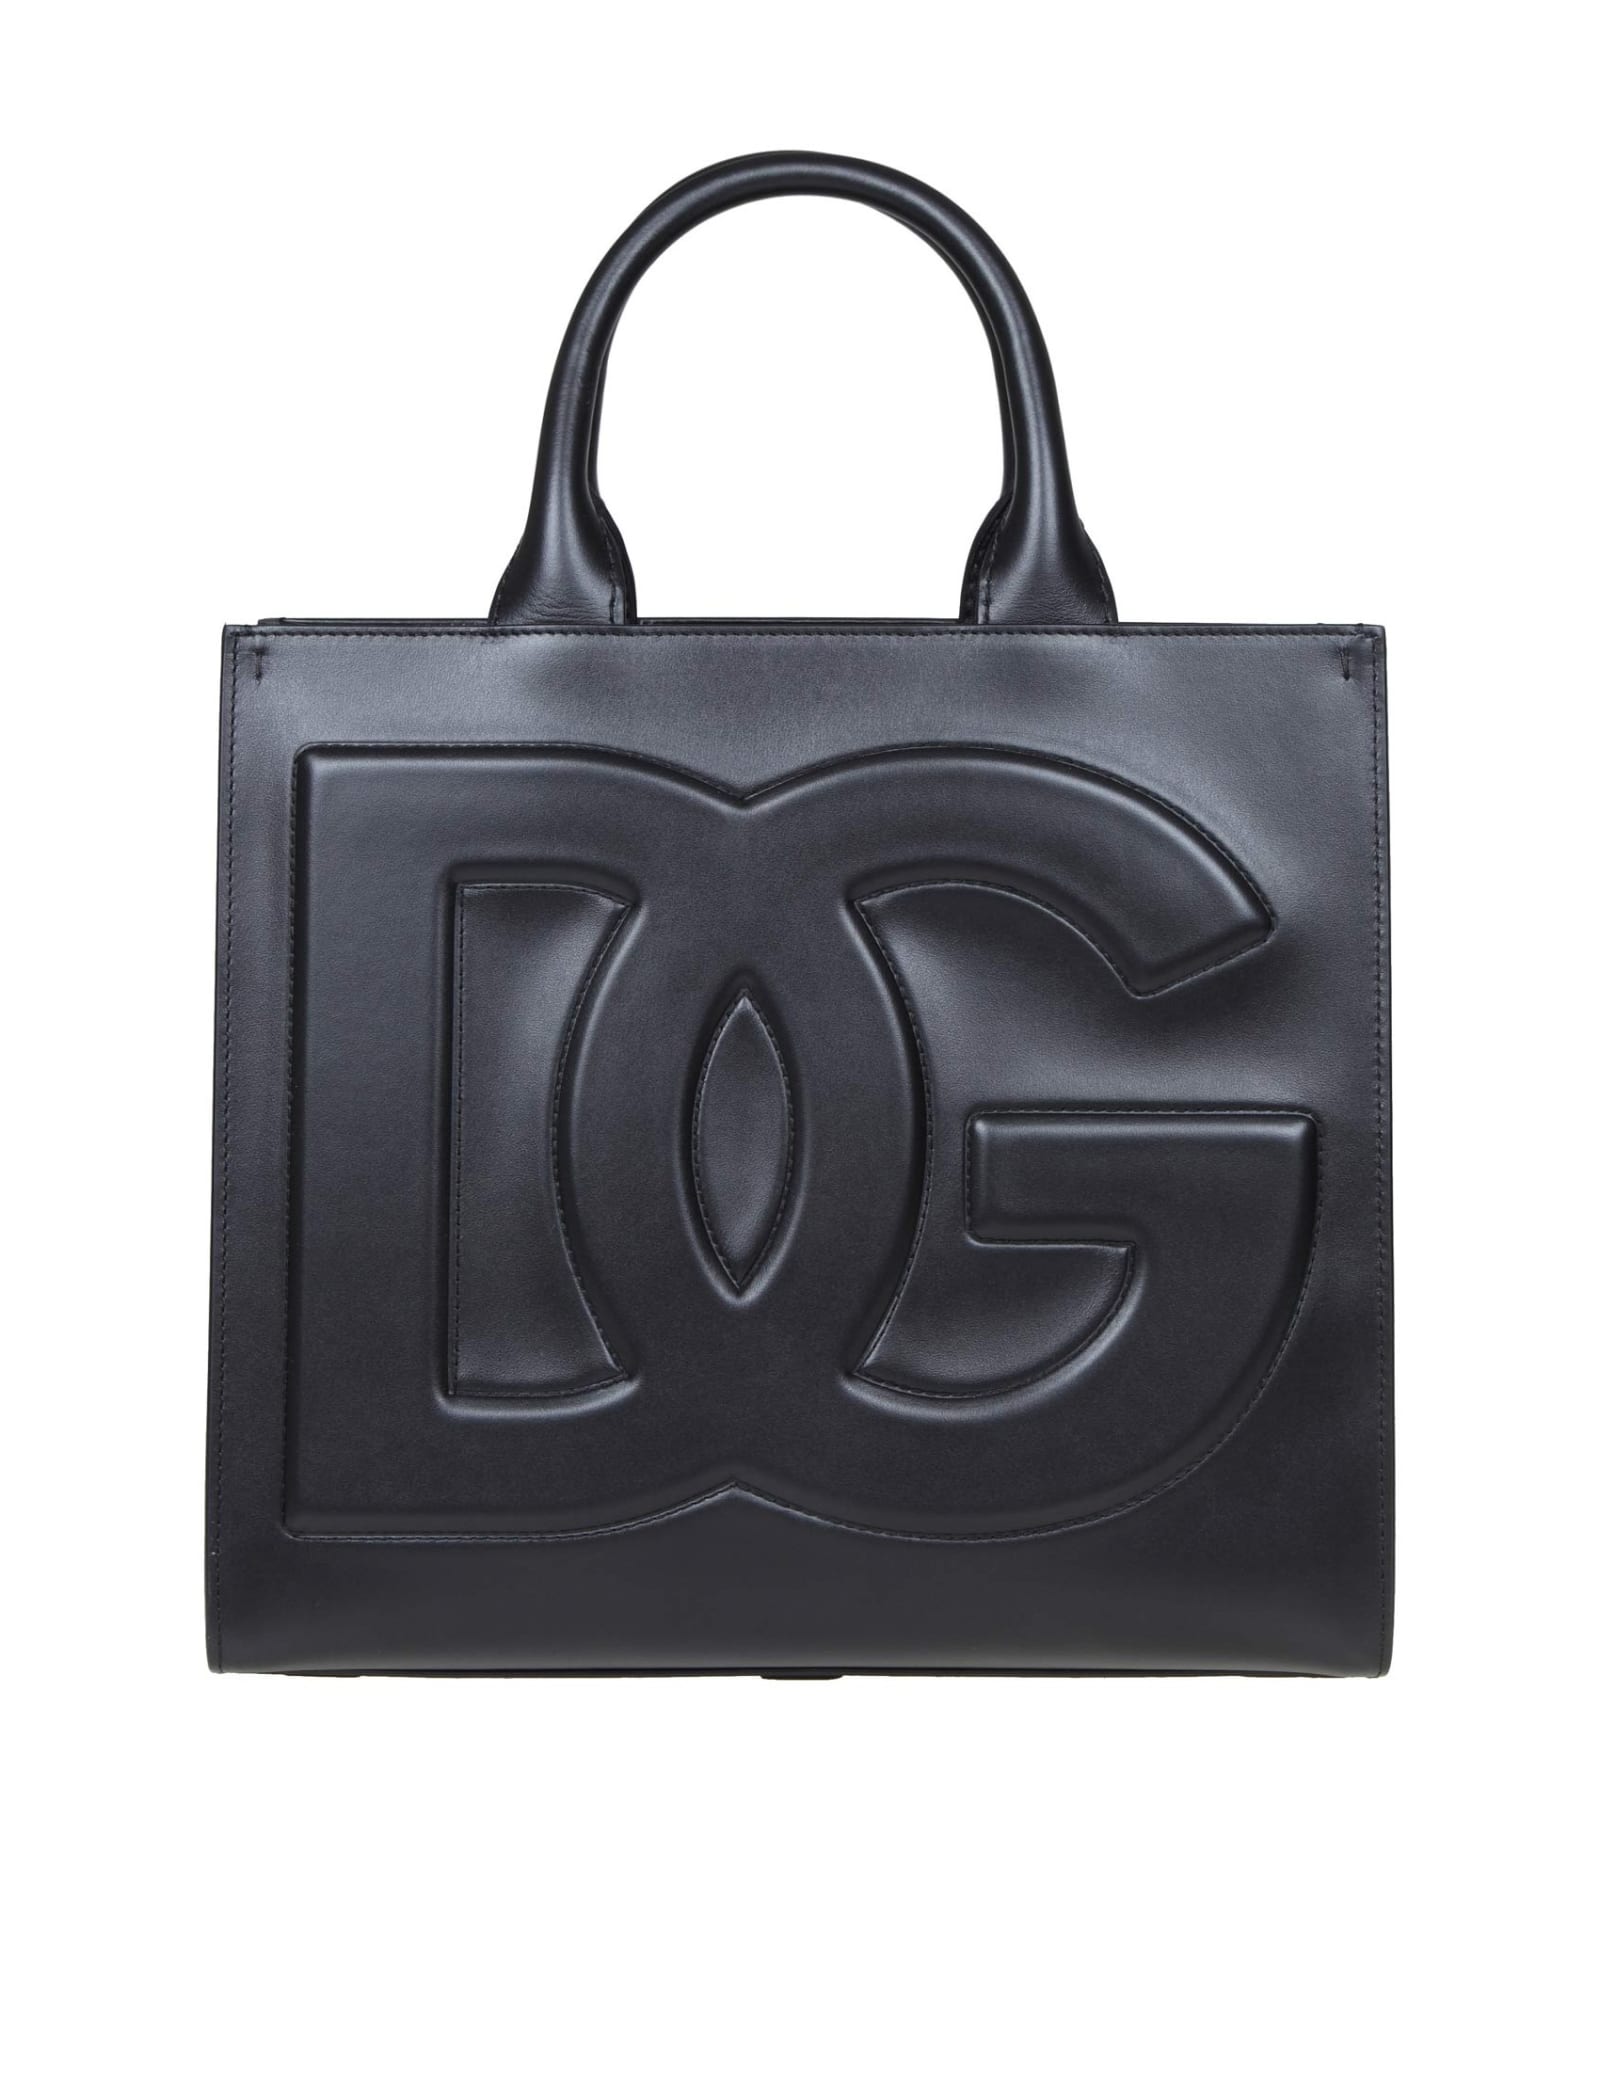 Dolce & Gabbana Handbag In Black Leather